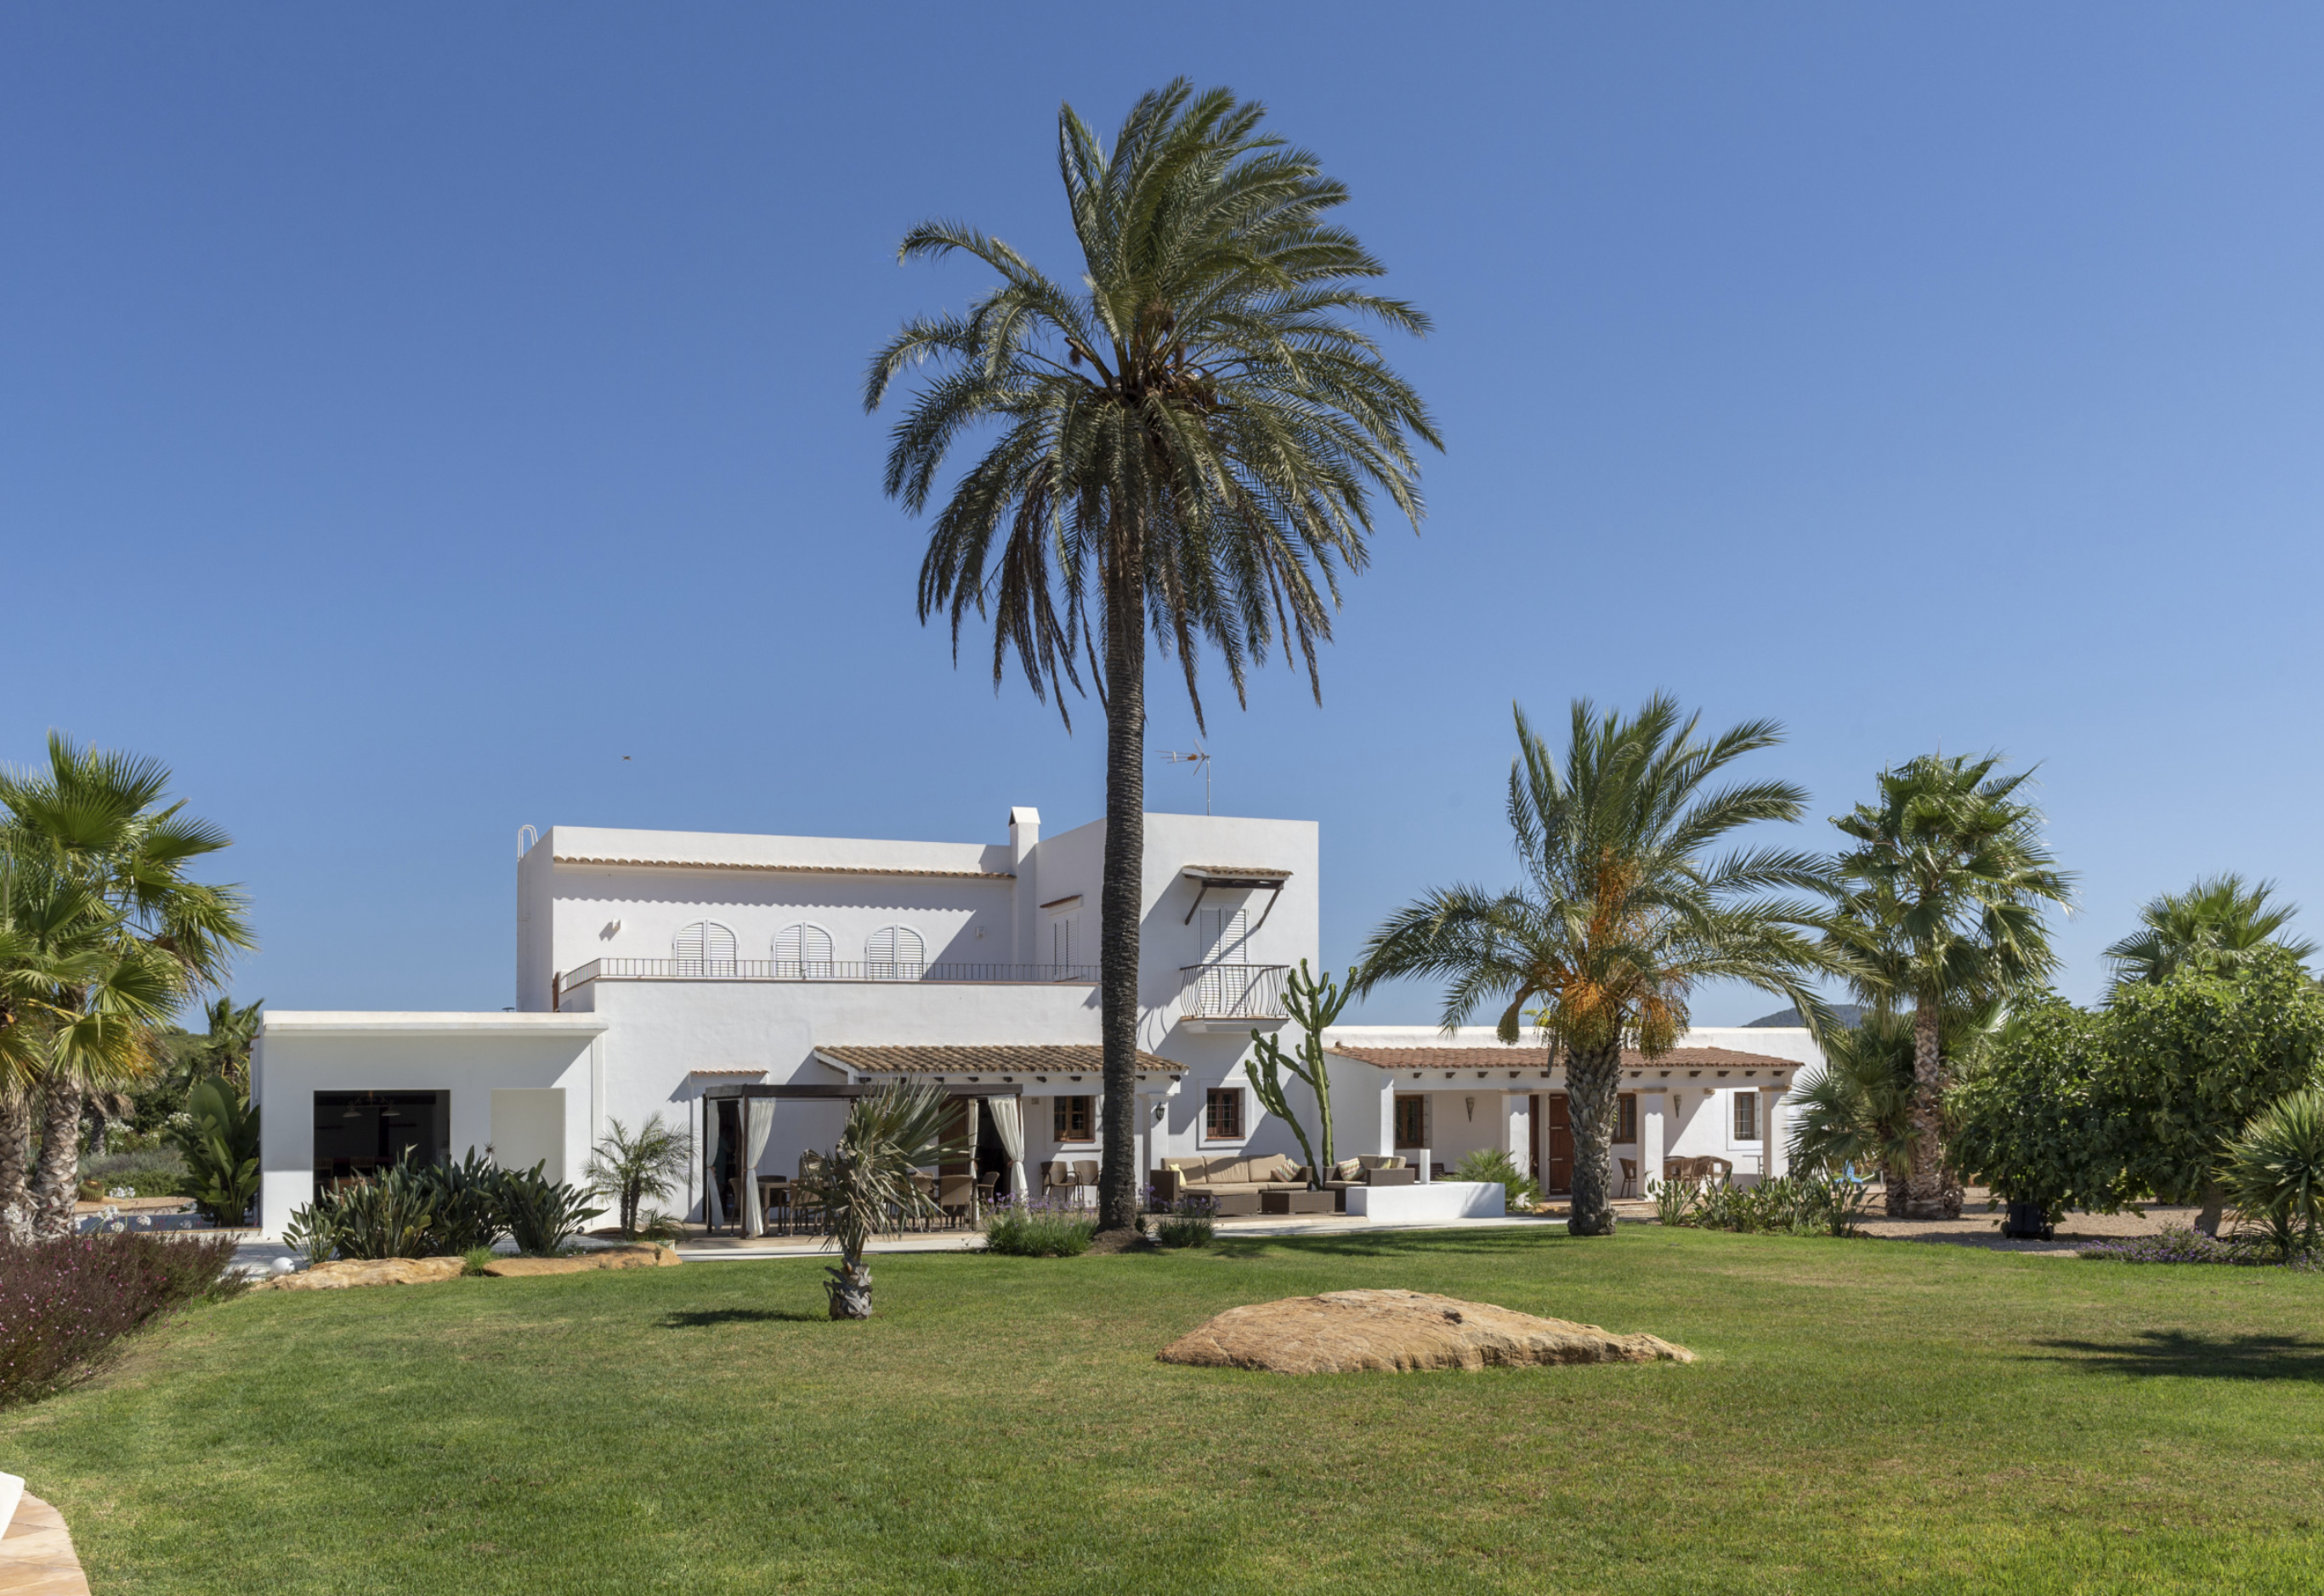 resa estates ibiza for rent villa santa eulalia 2021 can cosmi family house private pool .jpg